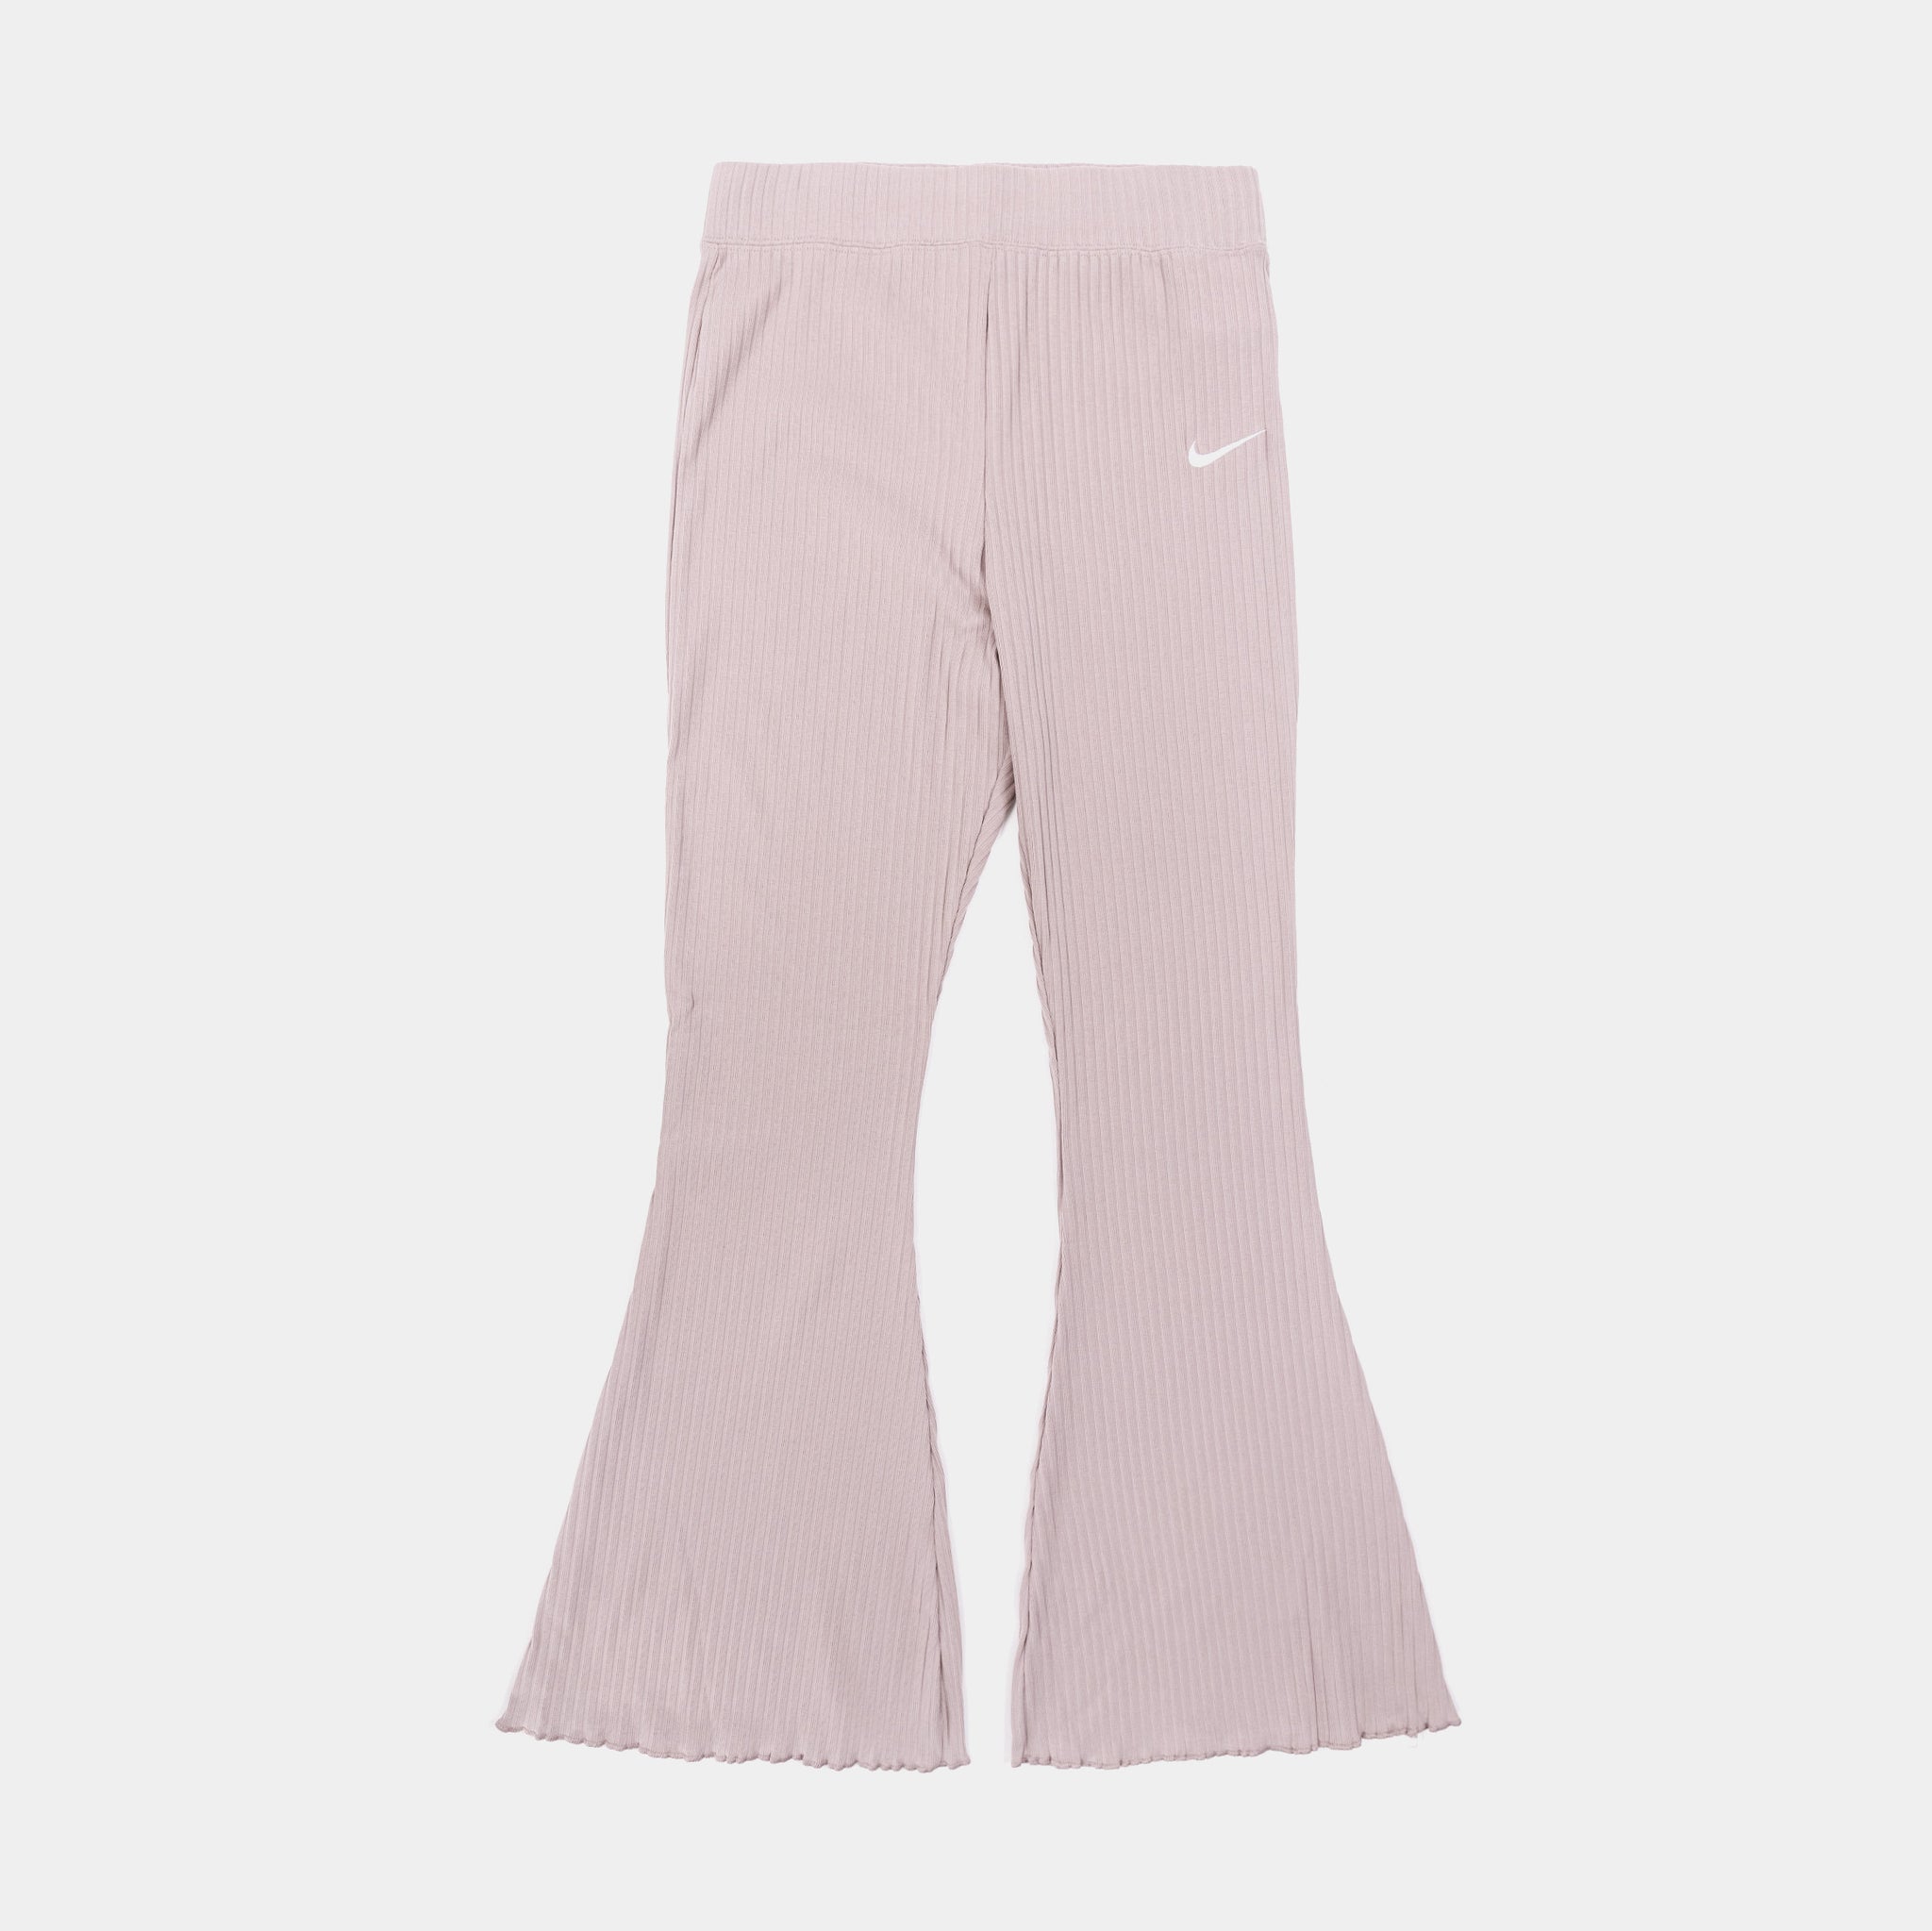 Best Deal for Nike Women's NSW Open Hem Fleece Pant Varsity (Small, Jade